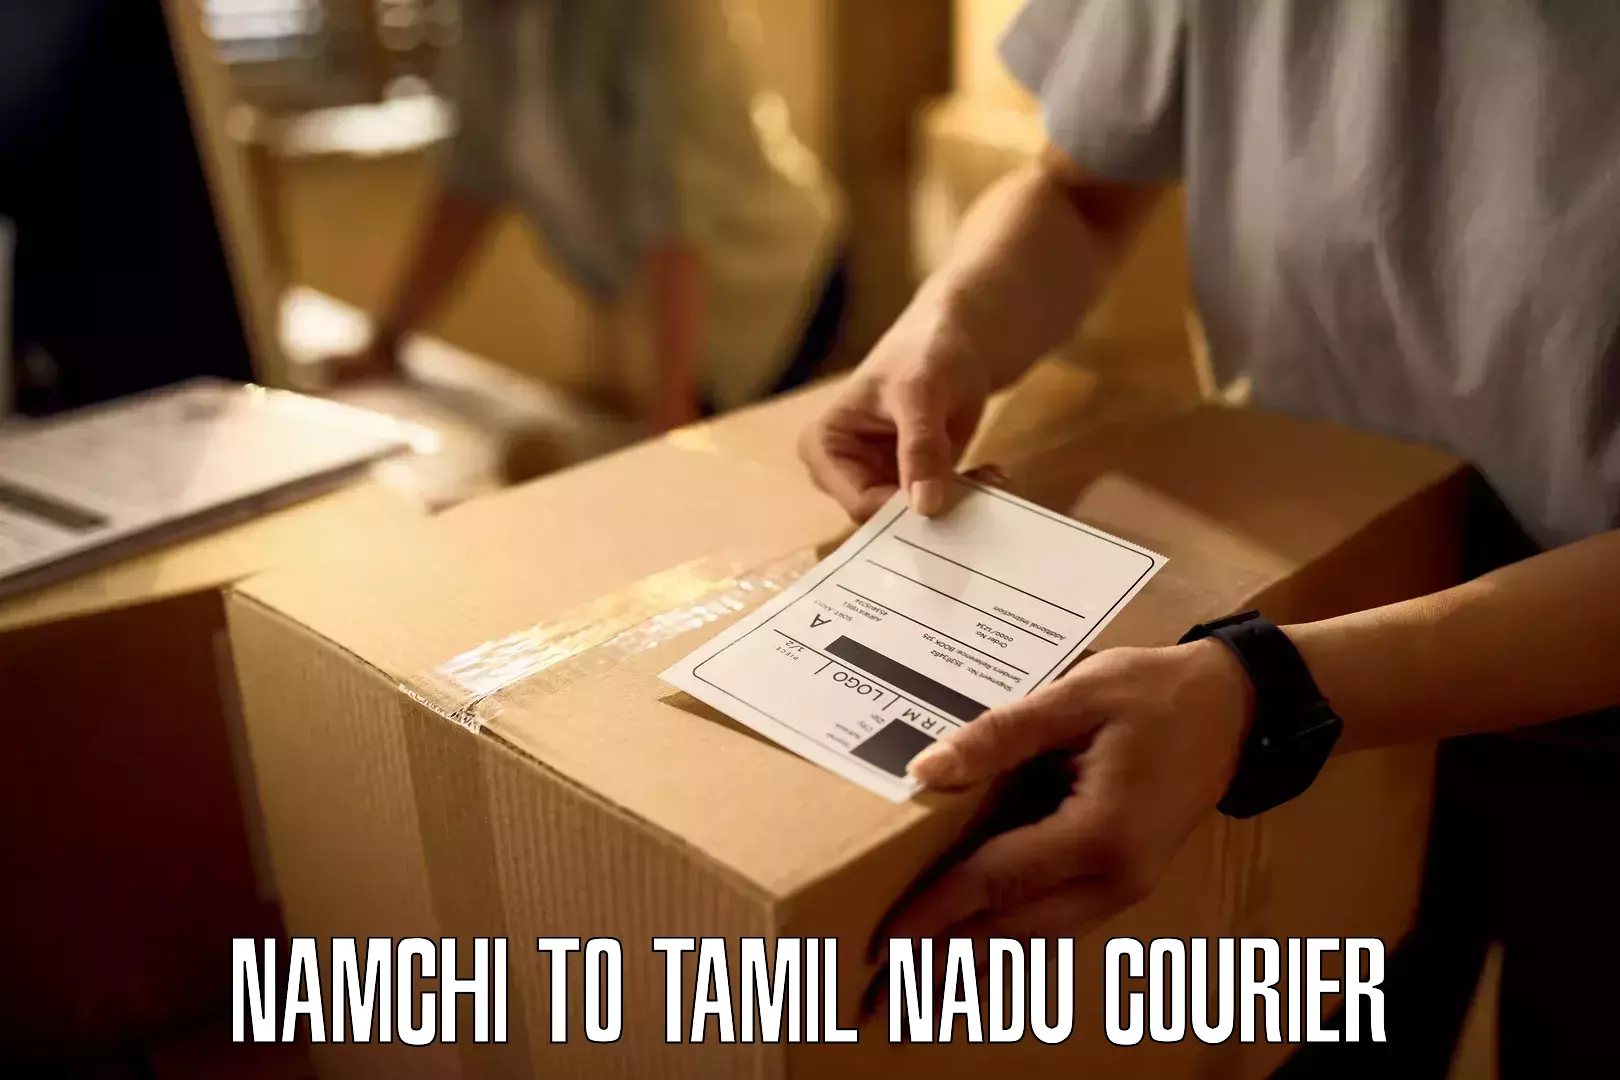 Return courier service Namchi to Ennore Port Chennai